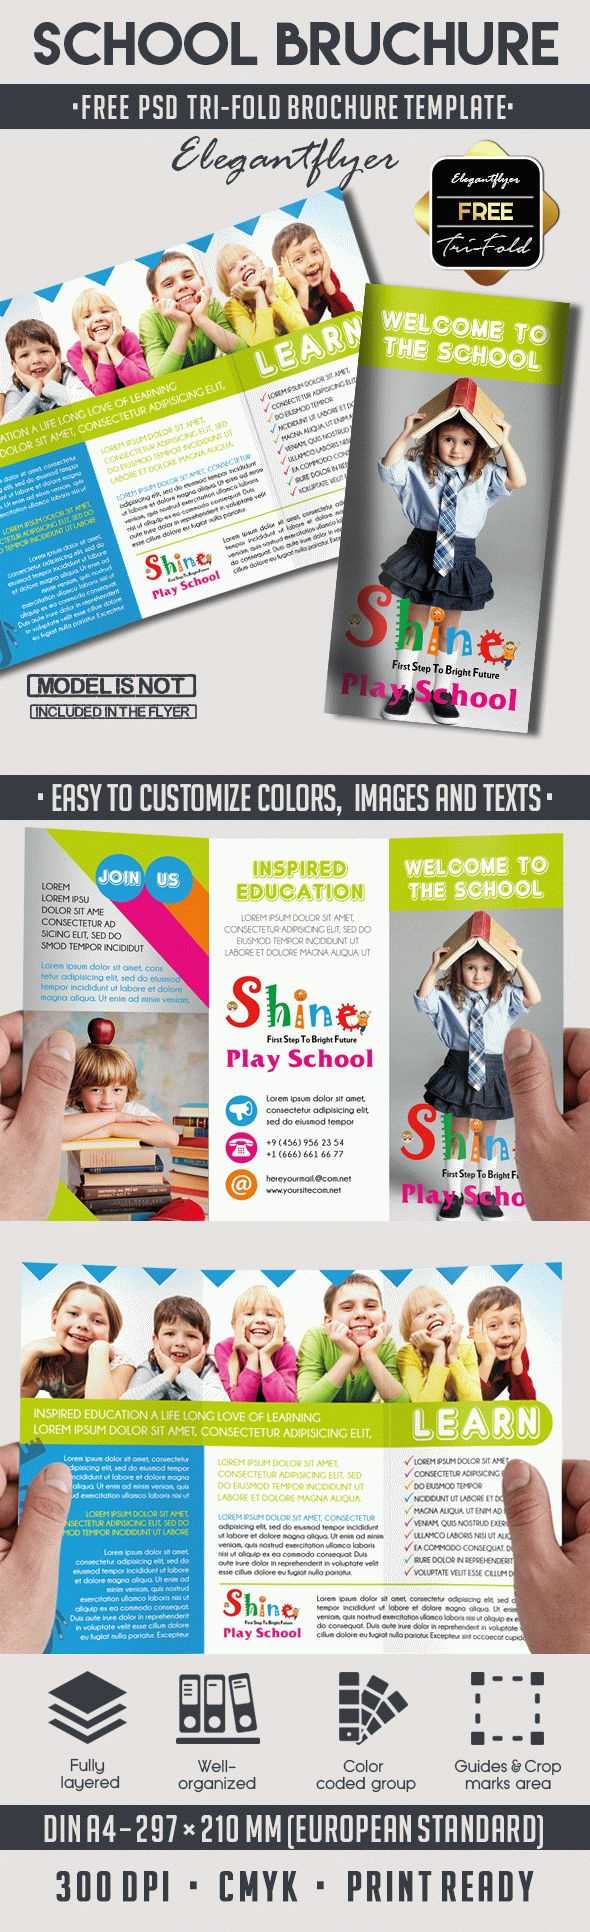 School – Free Psd Tri Fold Psd Brochure Template With Regard To Play School Brochure Templates